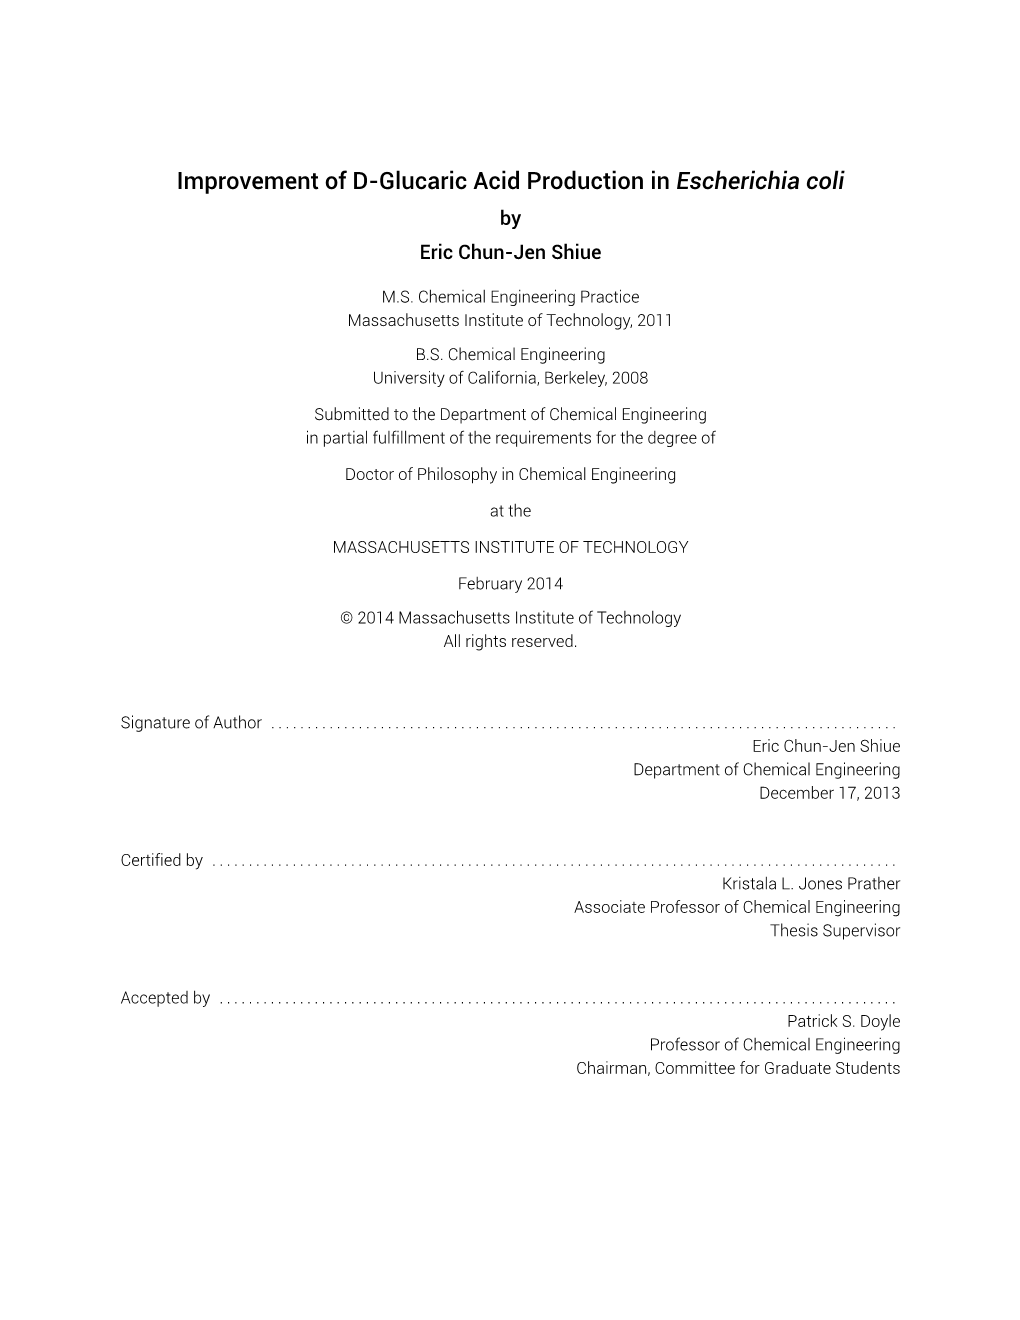 Improvement of D-Glucaric Acid Production in Escherichia Coli by Eric Chun-Jen Shiue